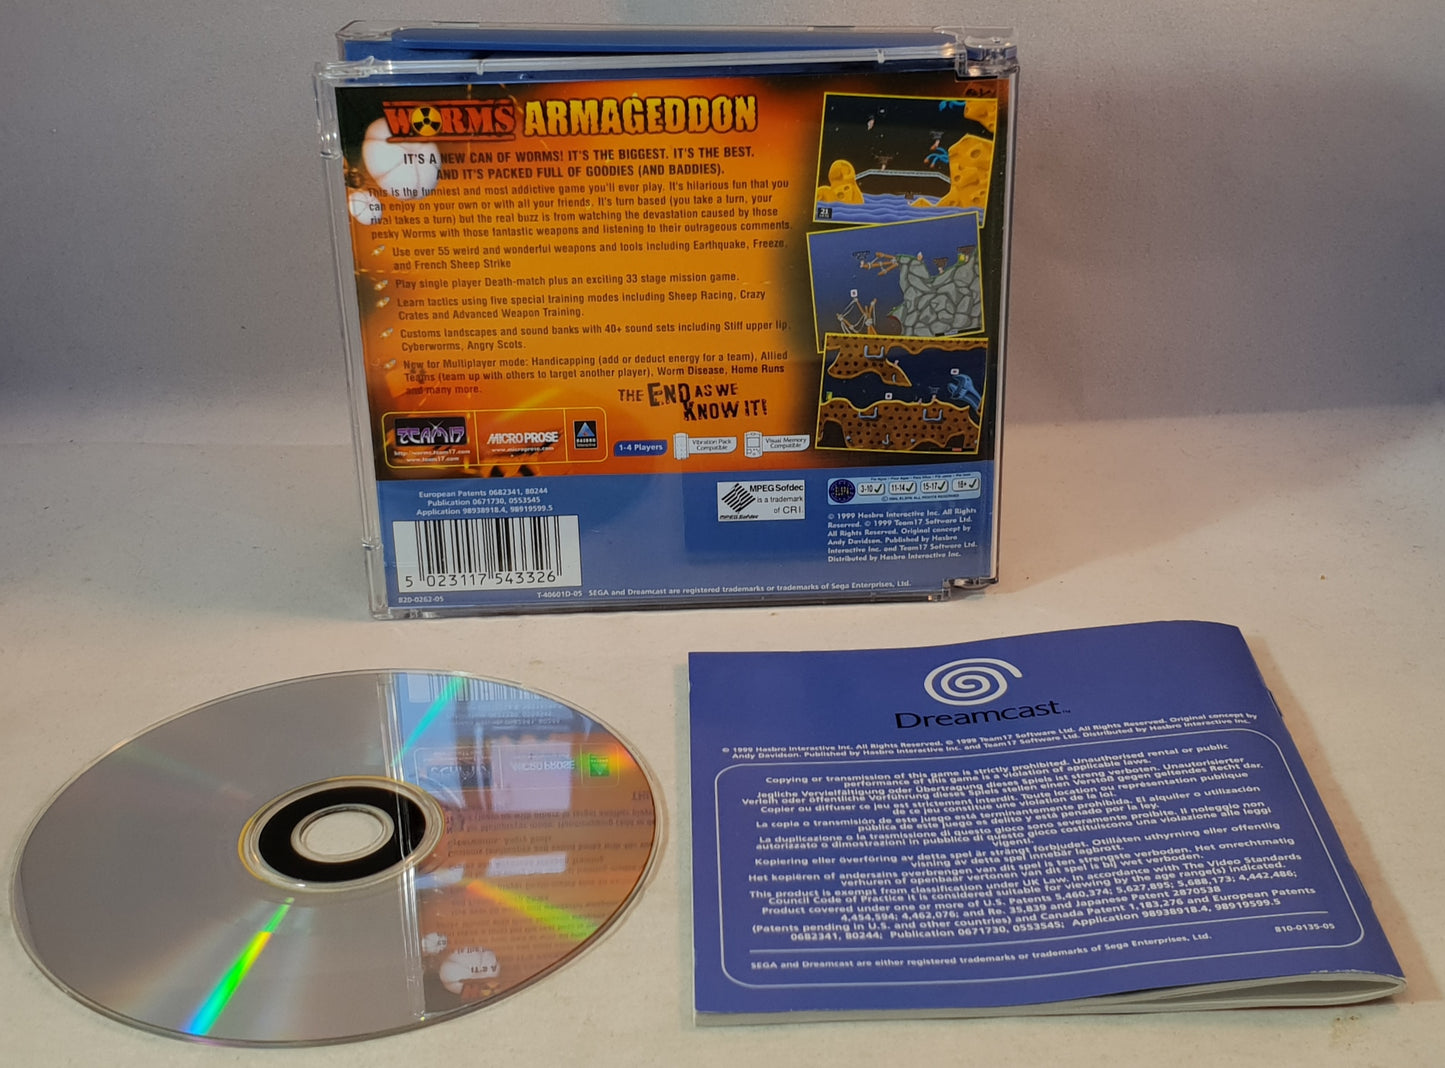 Worms Armageddon (Sega Dreamcast) game